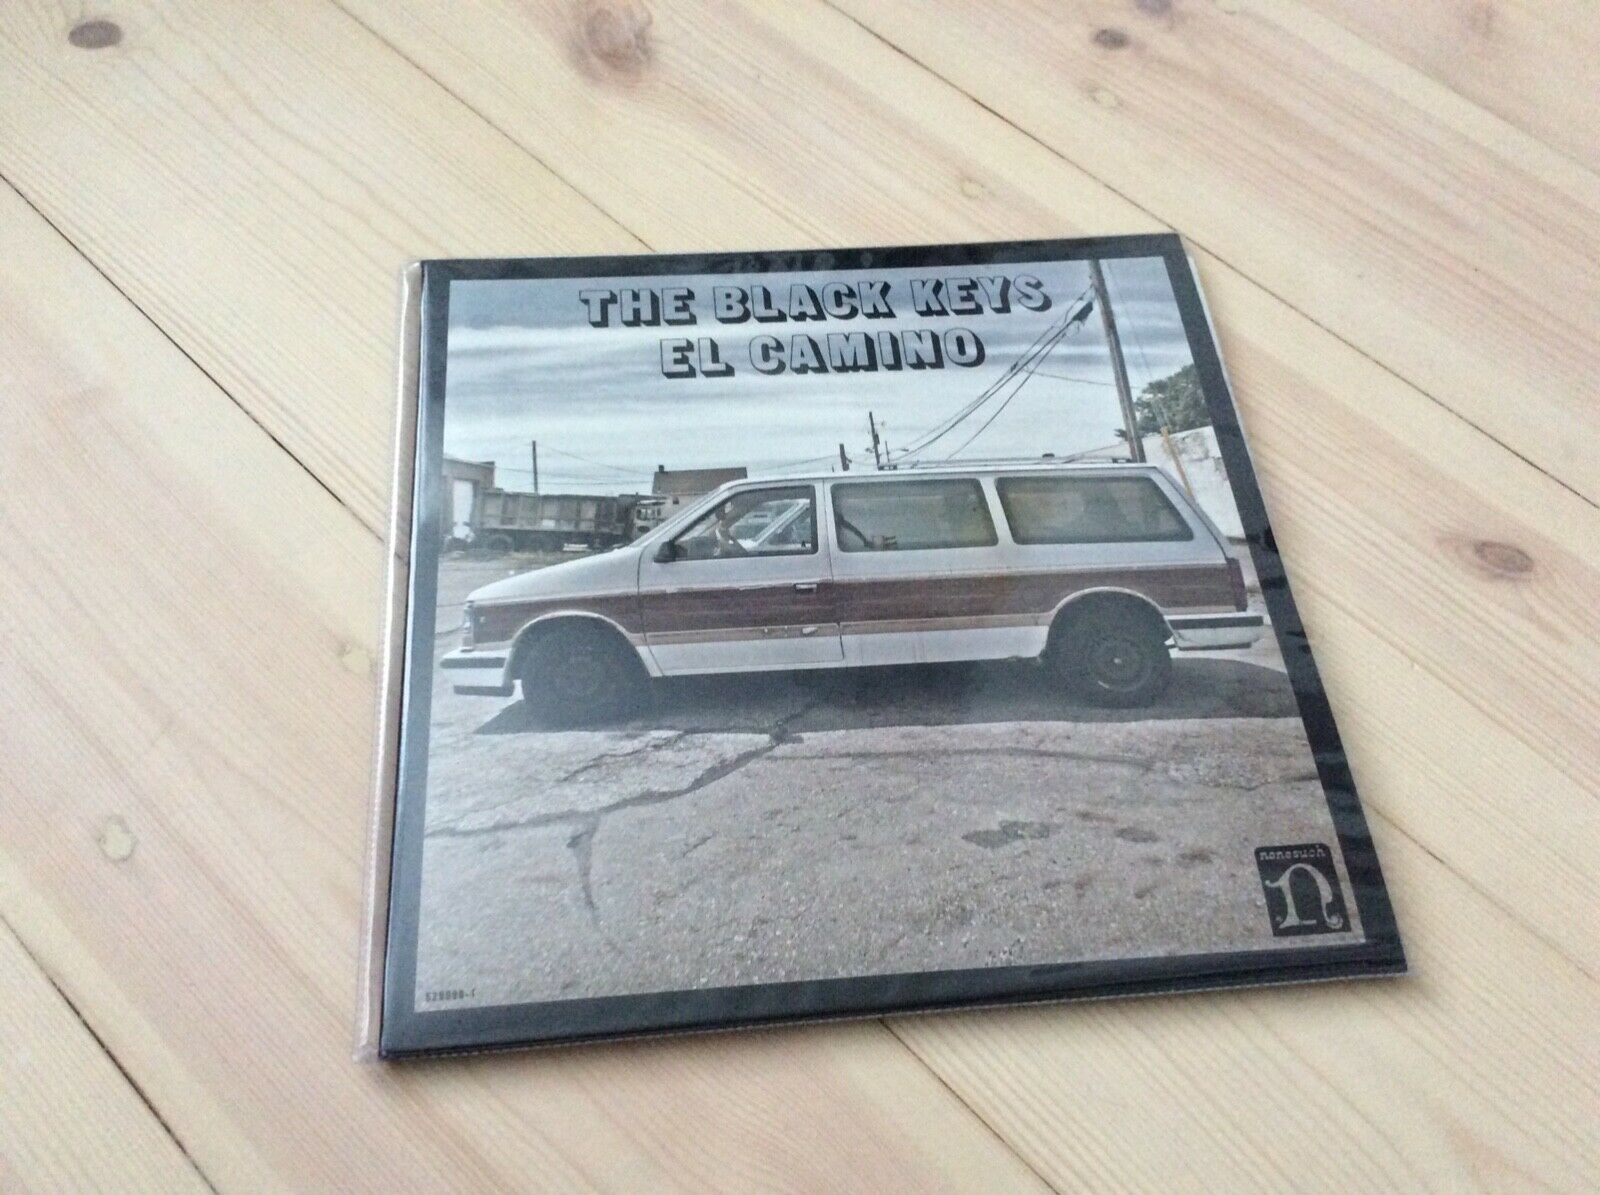  The Black Keys / El Camino vinyl lp /529099-1